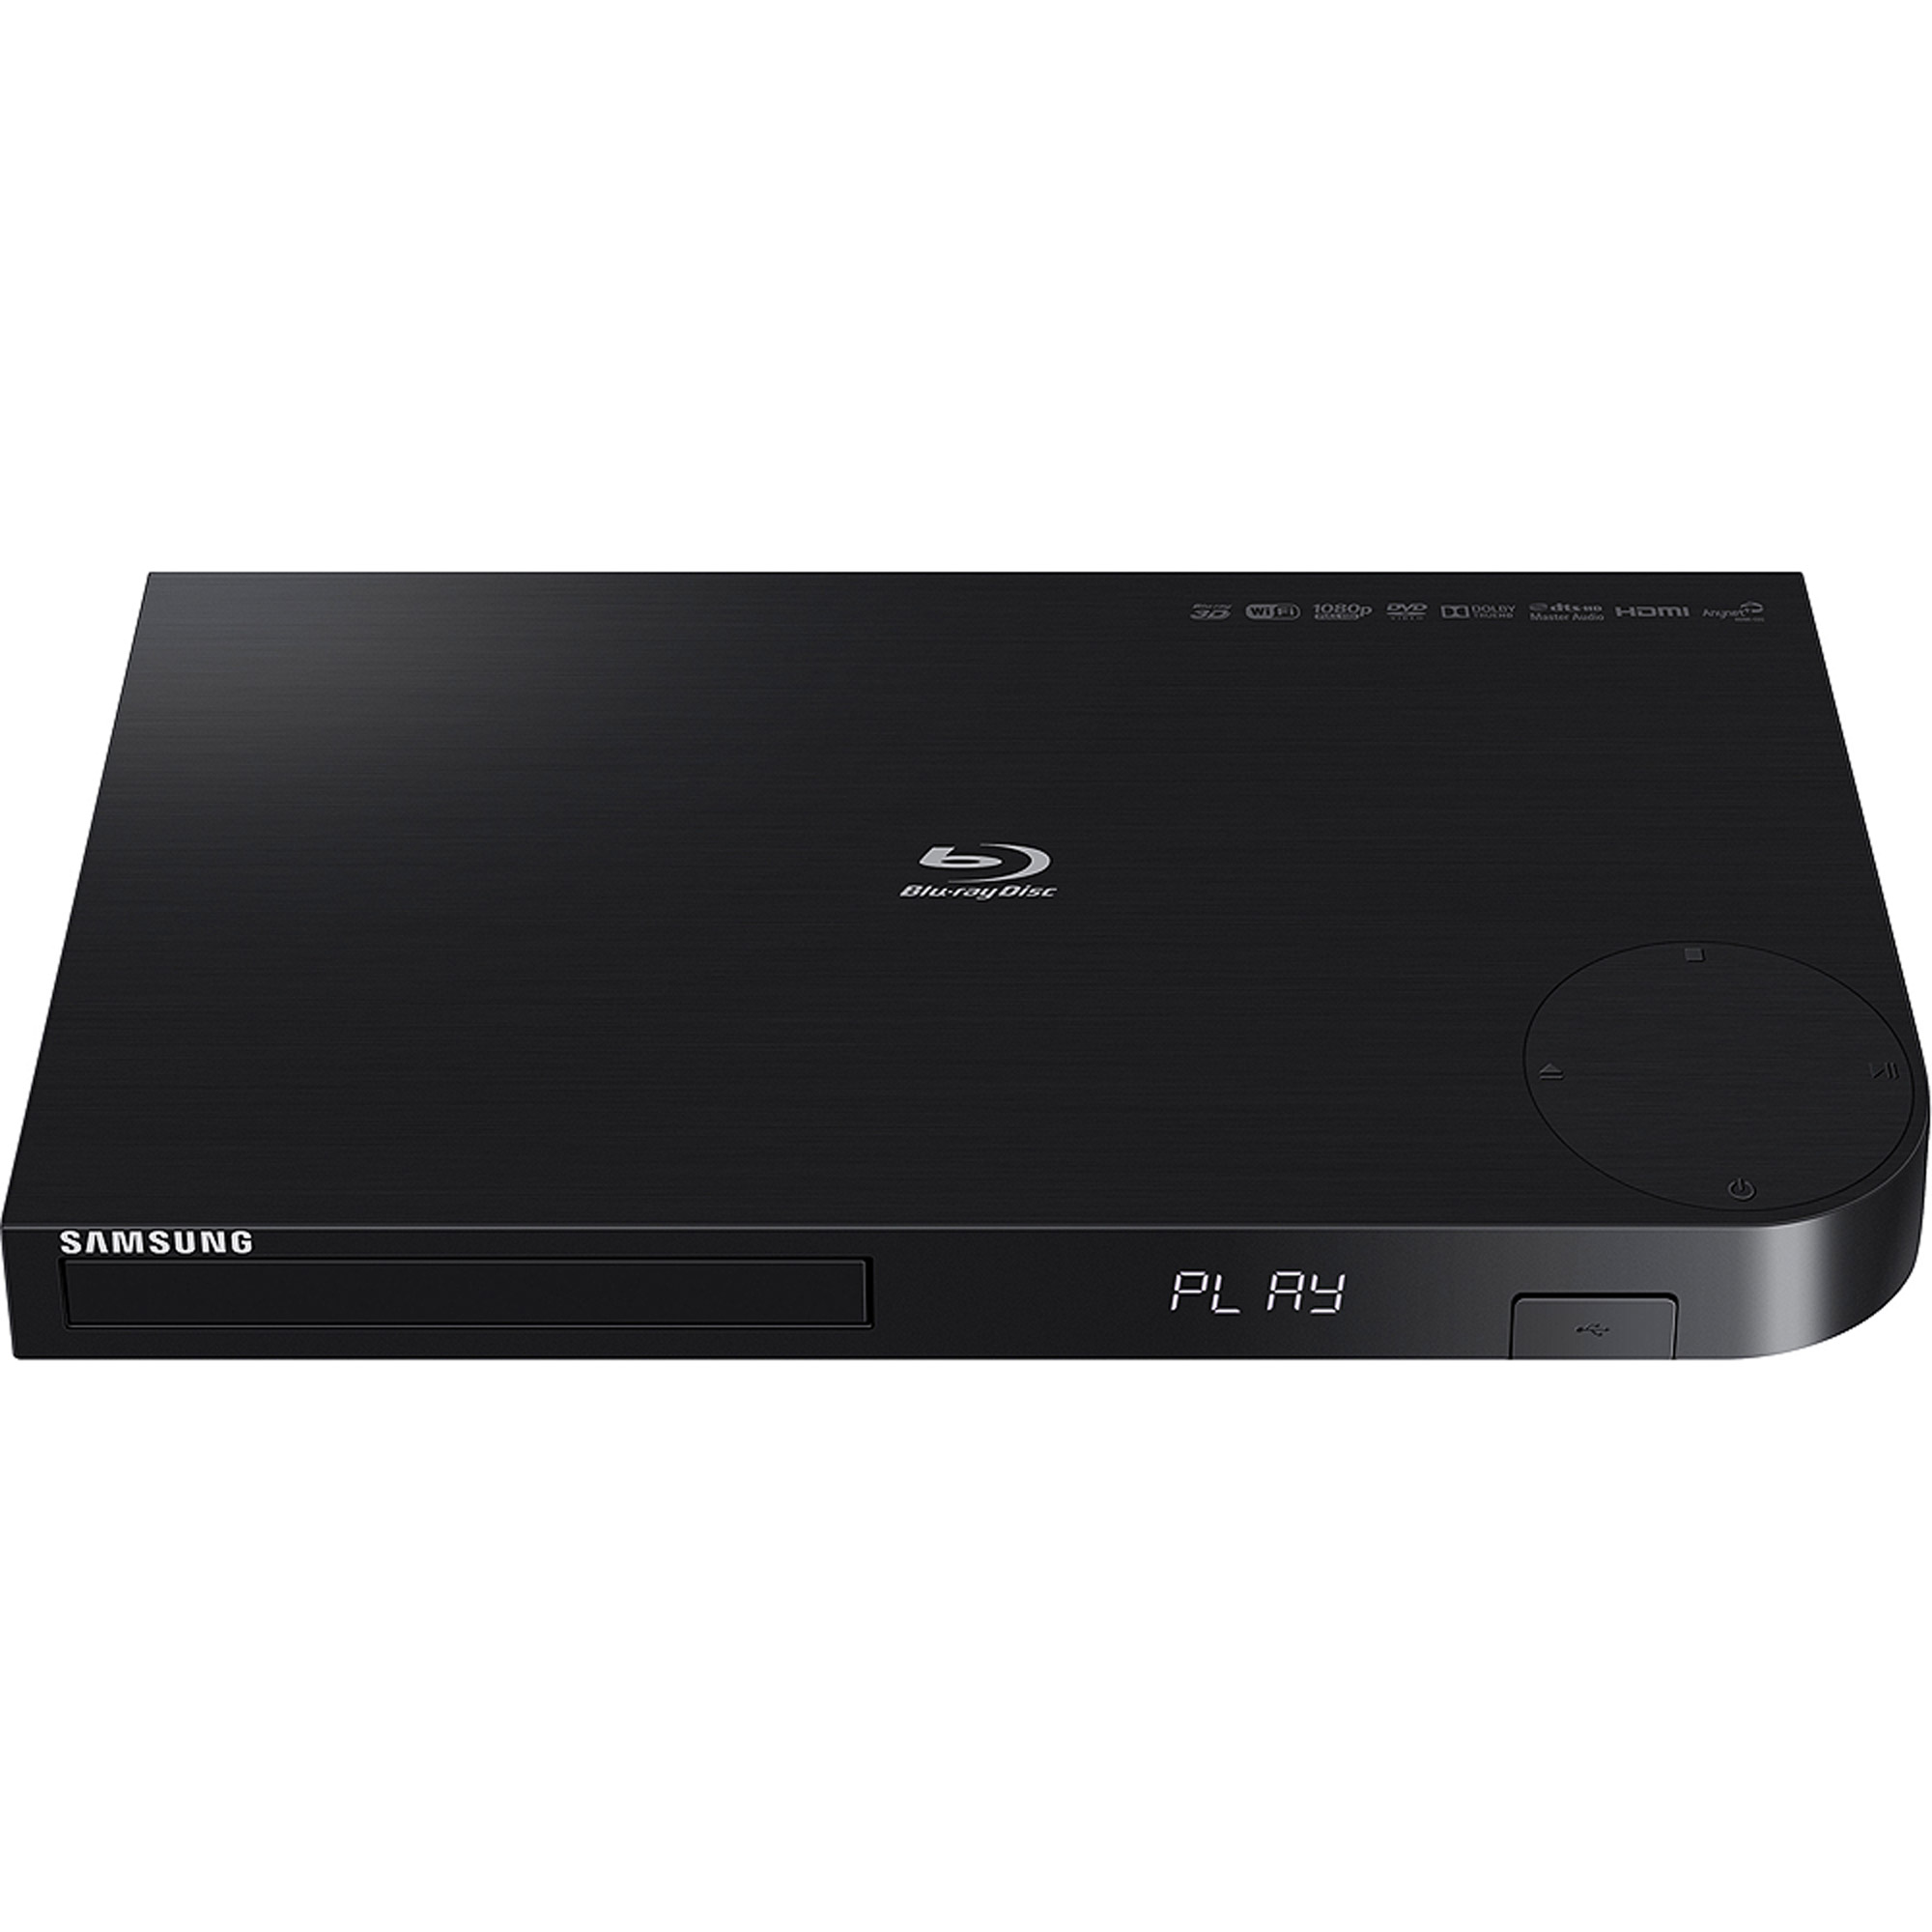 SAMSUNG Blu-ray & DVD Player with 4K UHD Upscaling, WiFi Streaming - BD-JM63 - image 3 of 4